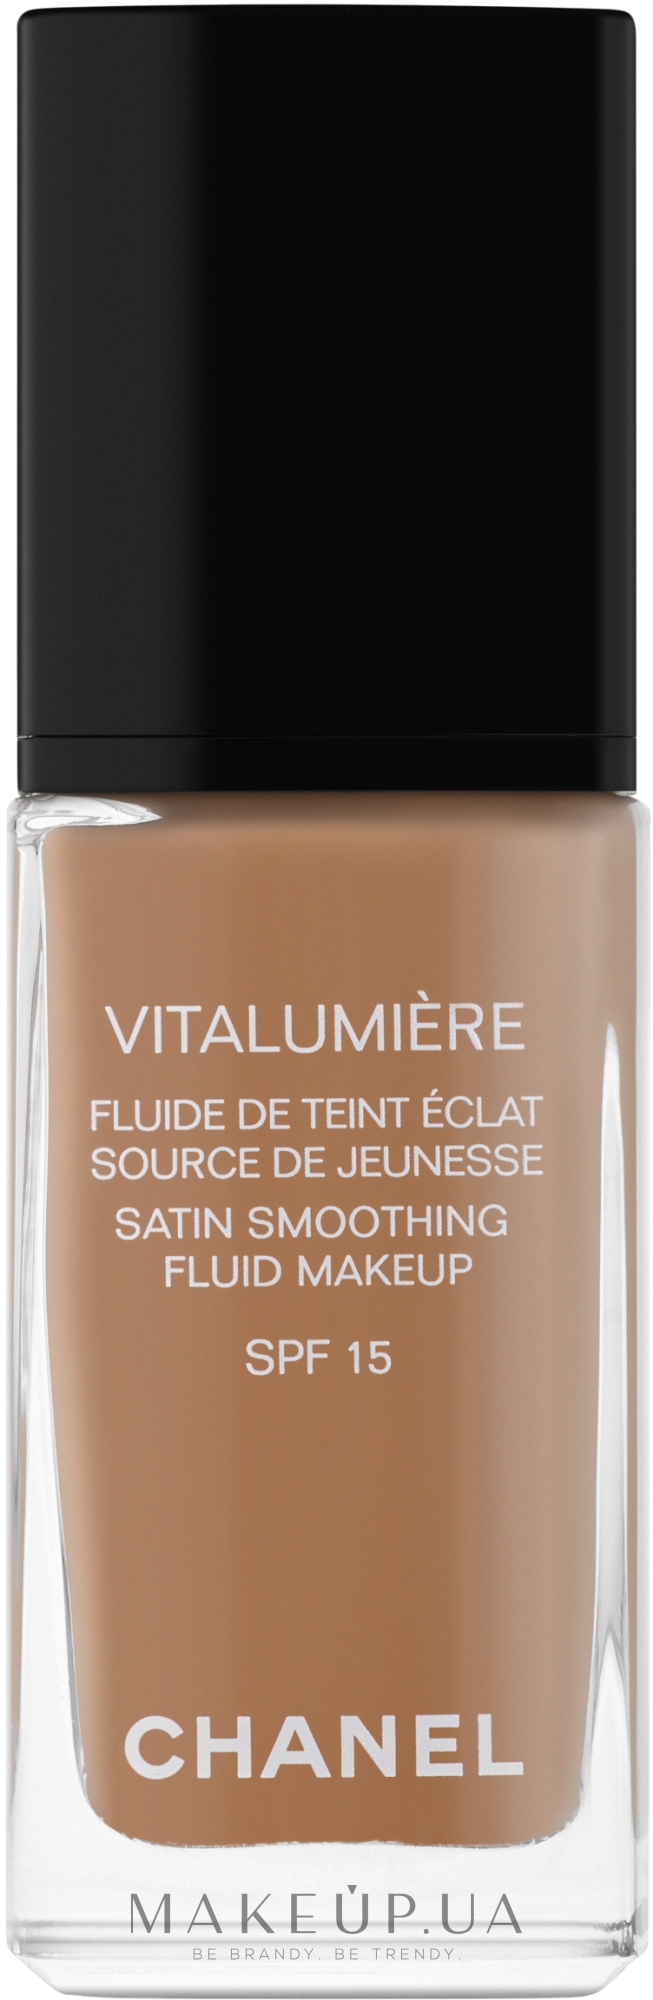 Chanel Vitalumiere Radiant Moisture Rich Fluid Foundation - #20